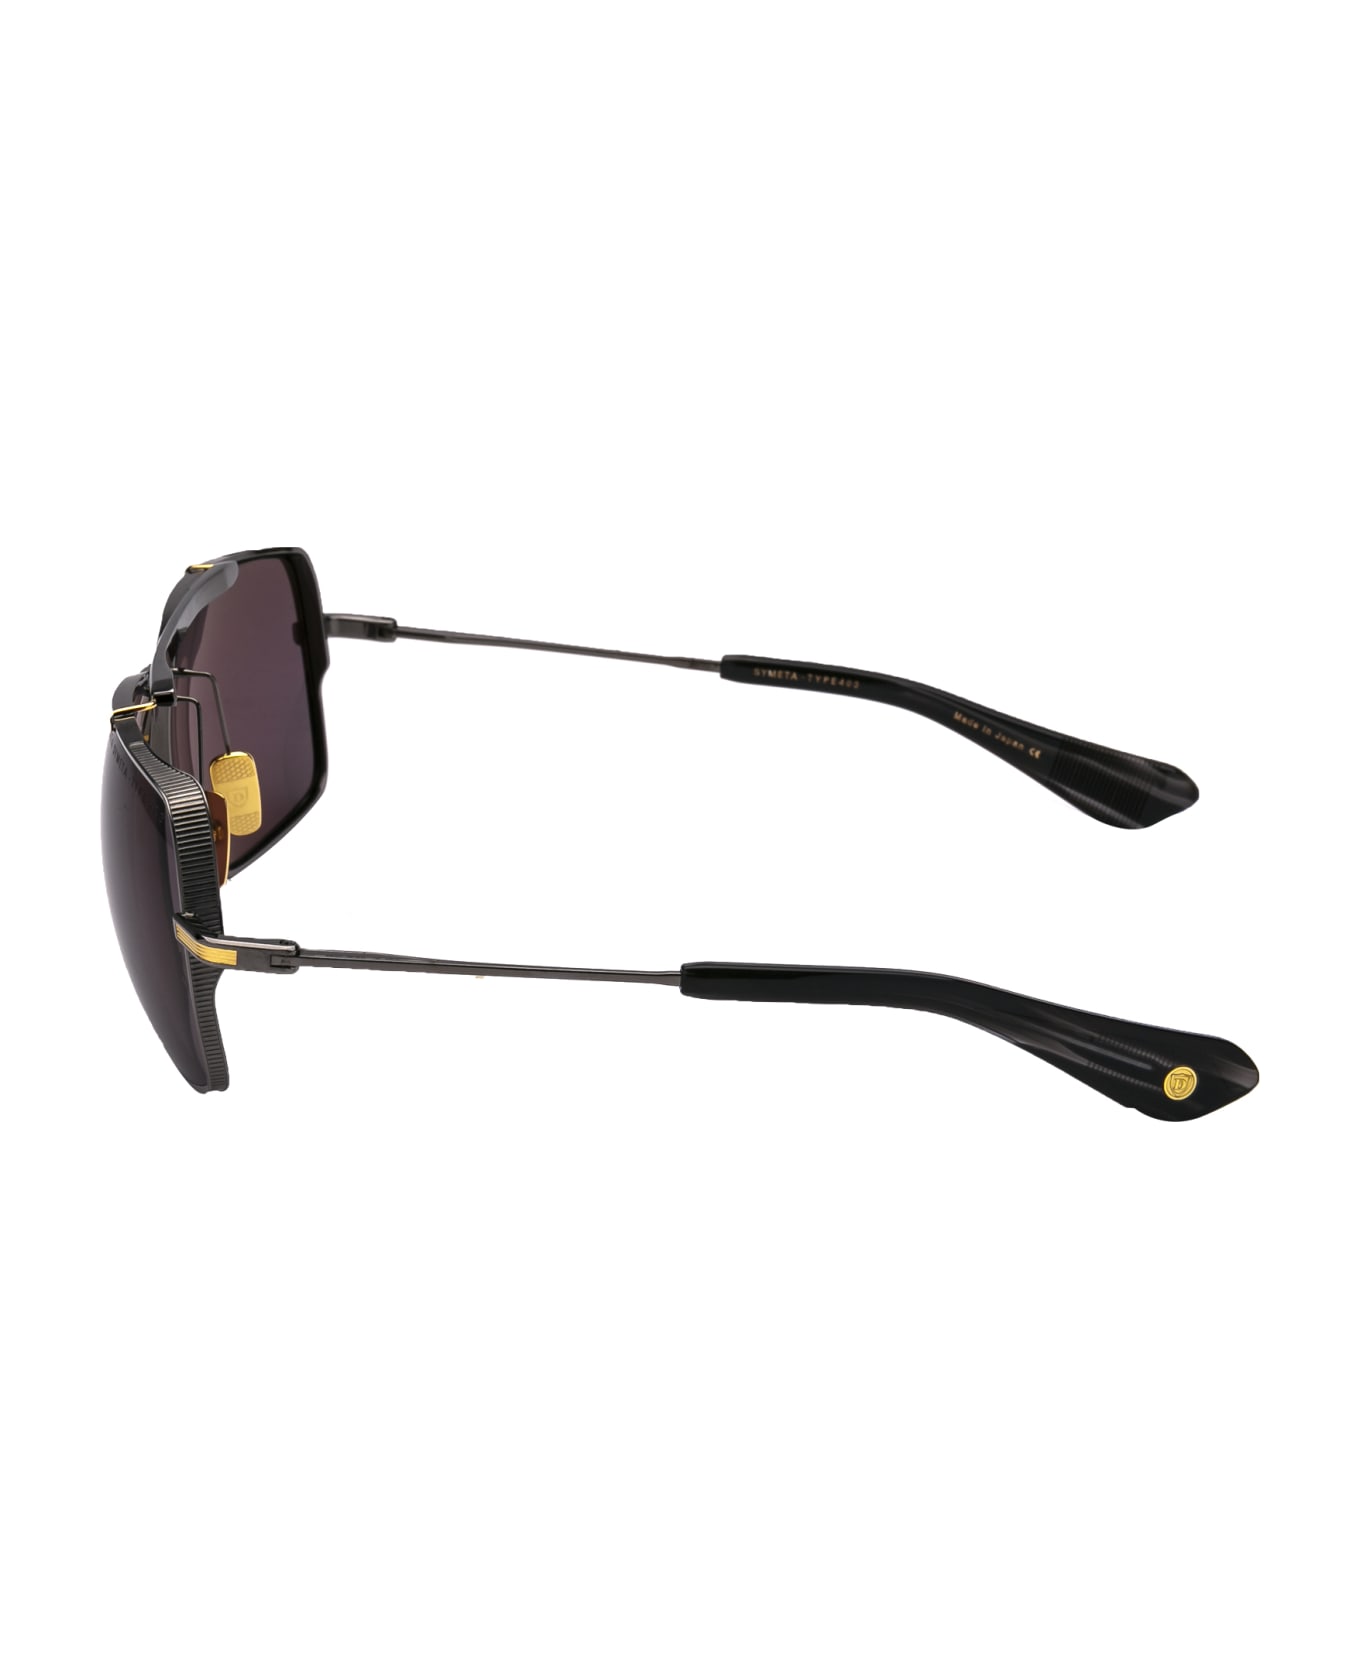 Dita Symeta - Type 403 Sunglasses - Black Rhodium - Yellow Gold